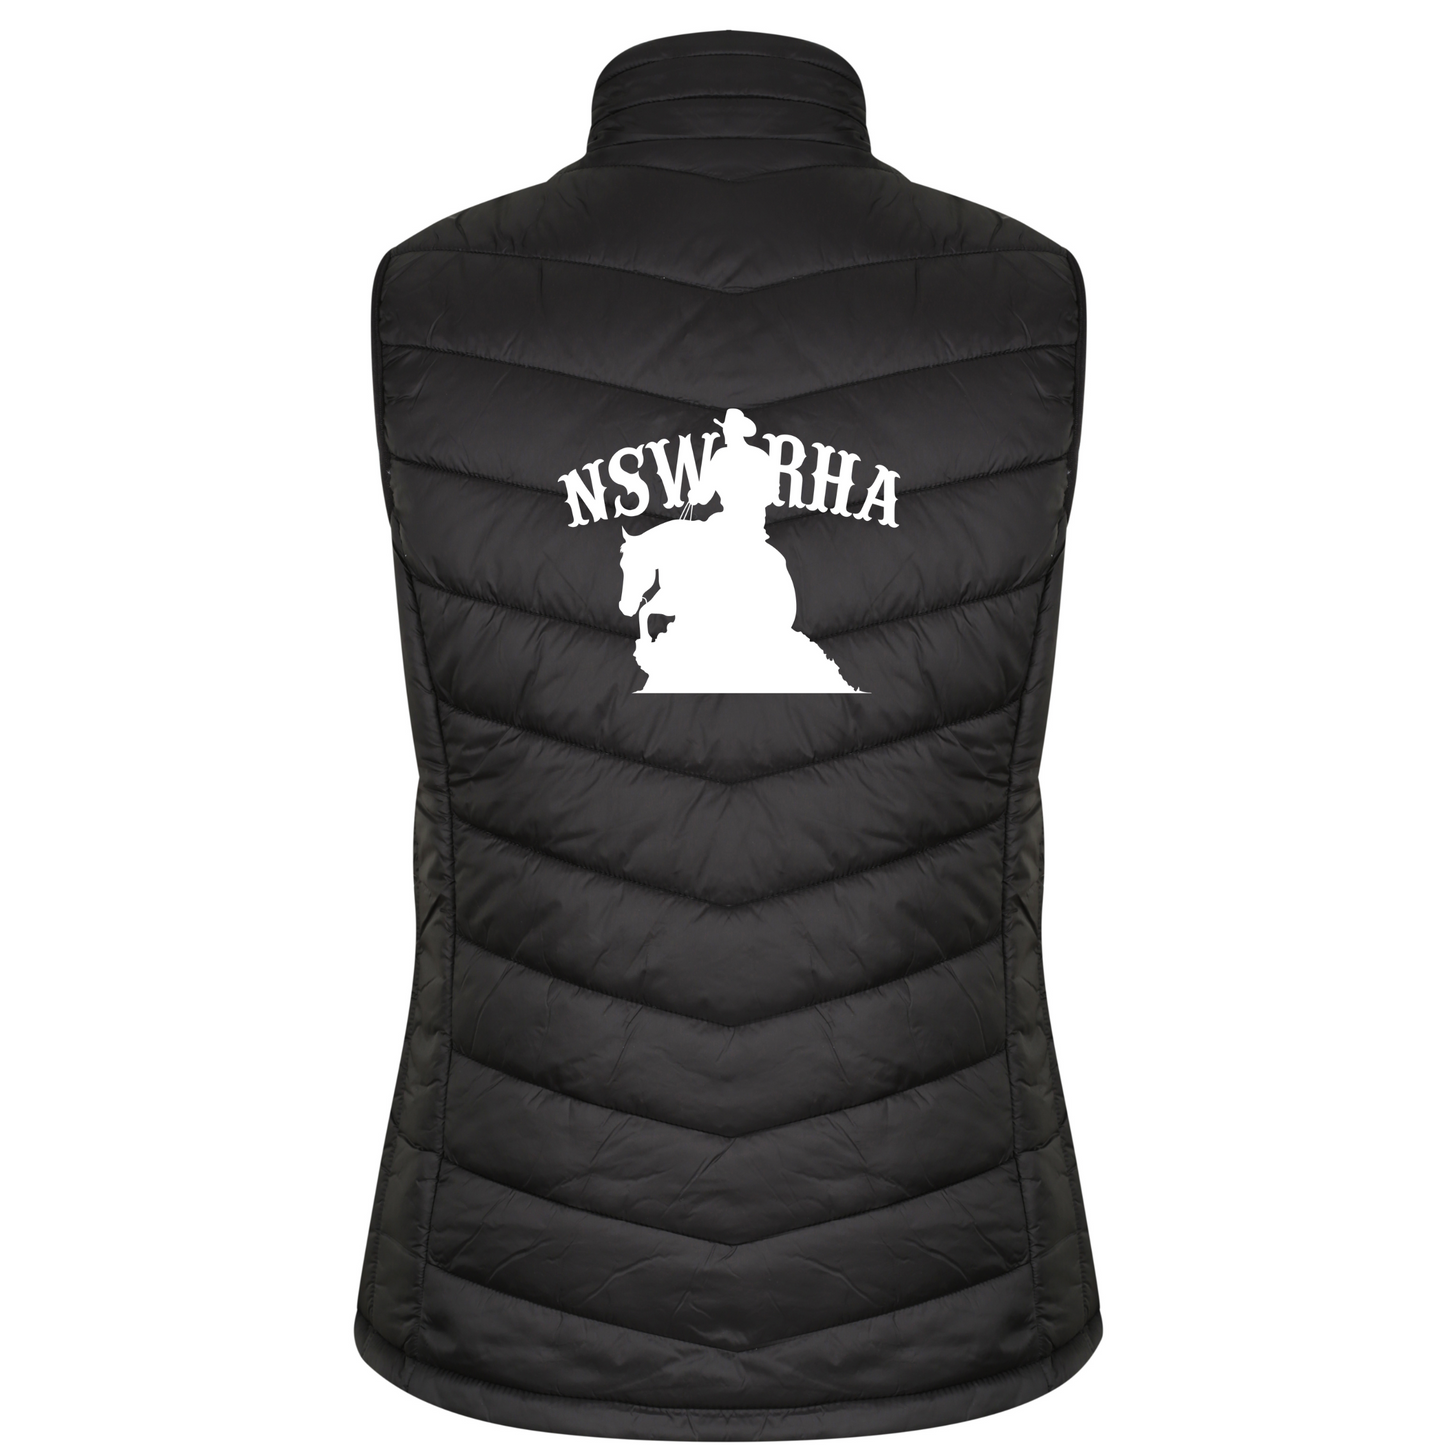 NSWRHA Puffer Vest